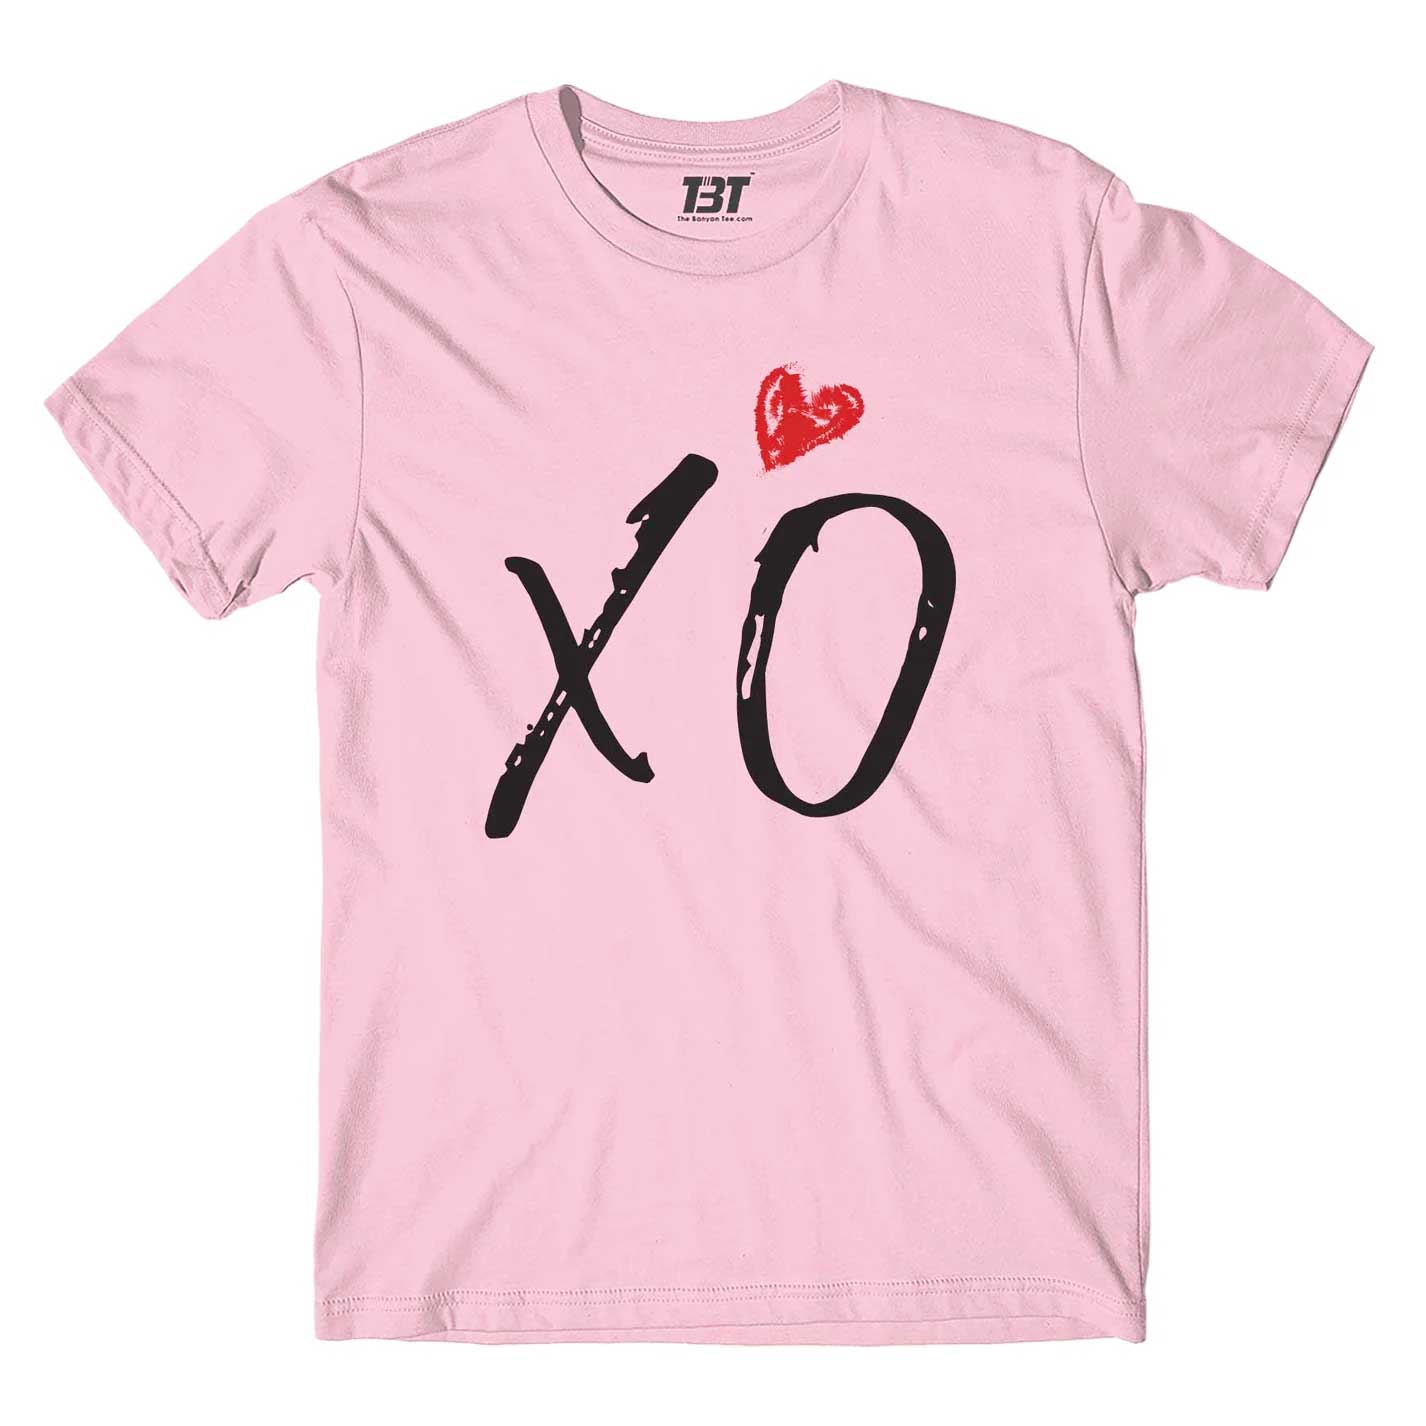 the weeknd xo t-shirt music band buy online usa united states the banyan tee tbt men women girls boys unisex baby pink